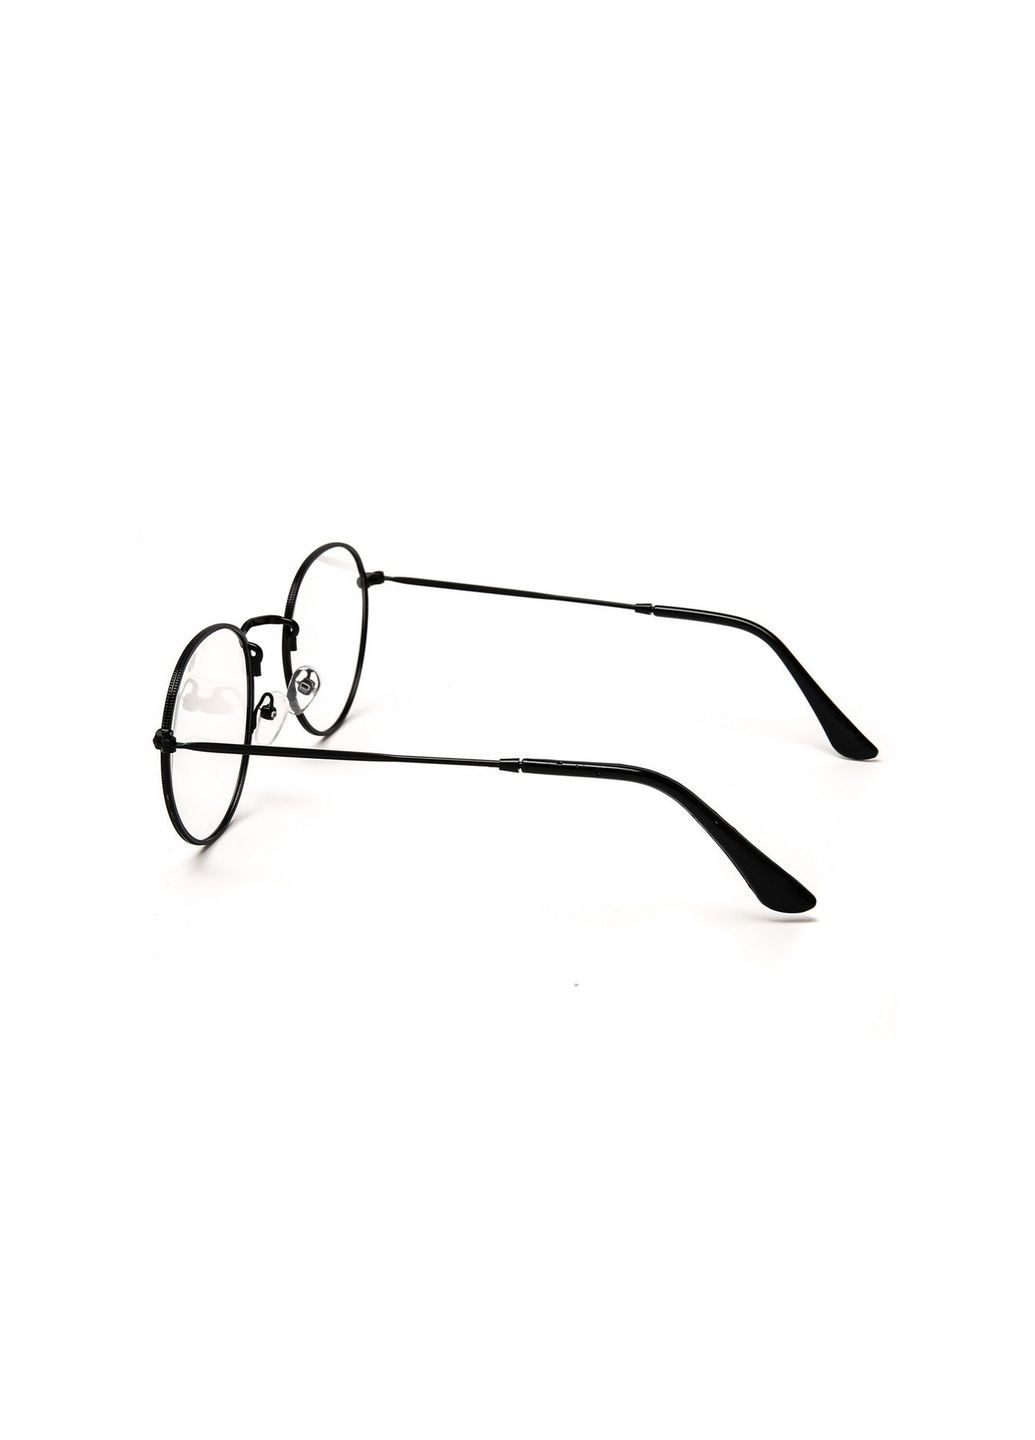 Имиджевые очки Тишейды мужские 094-871 LuckyLOOK 094-871m (289359291)